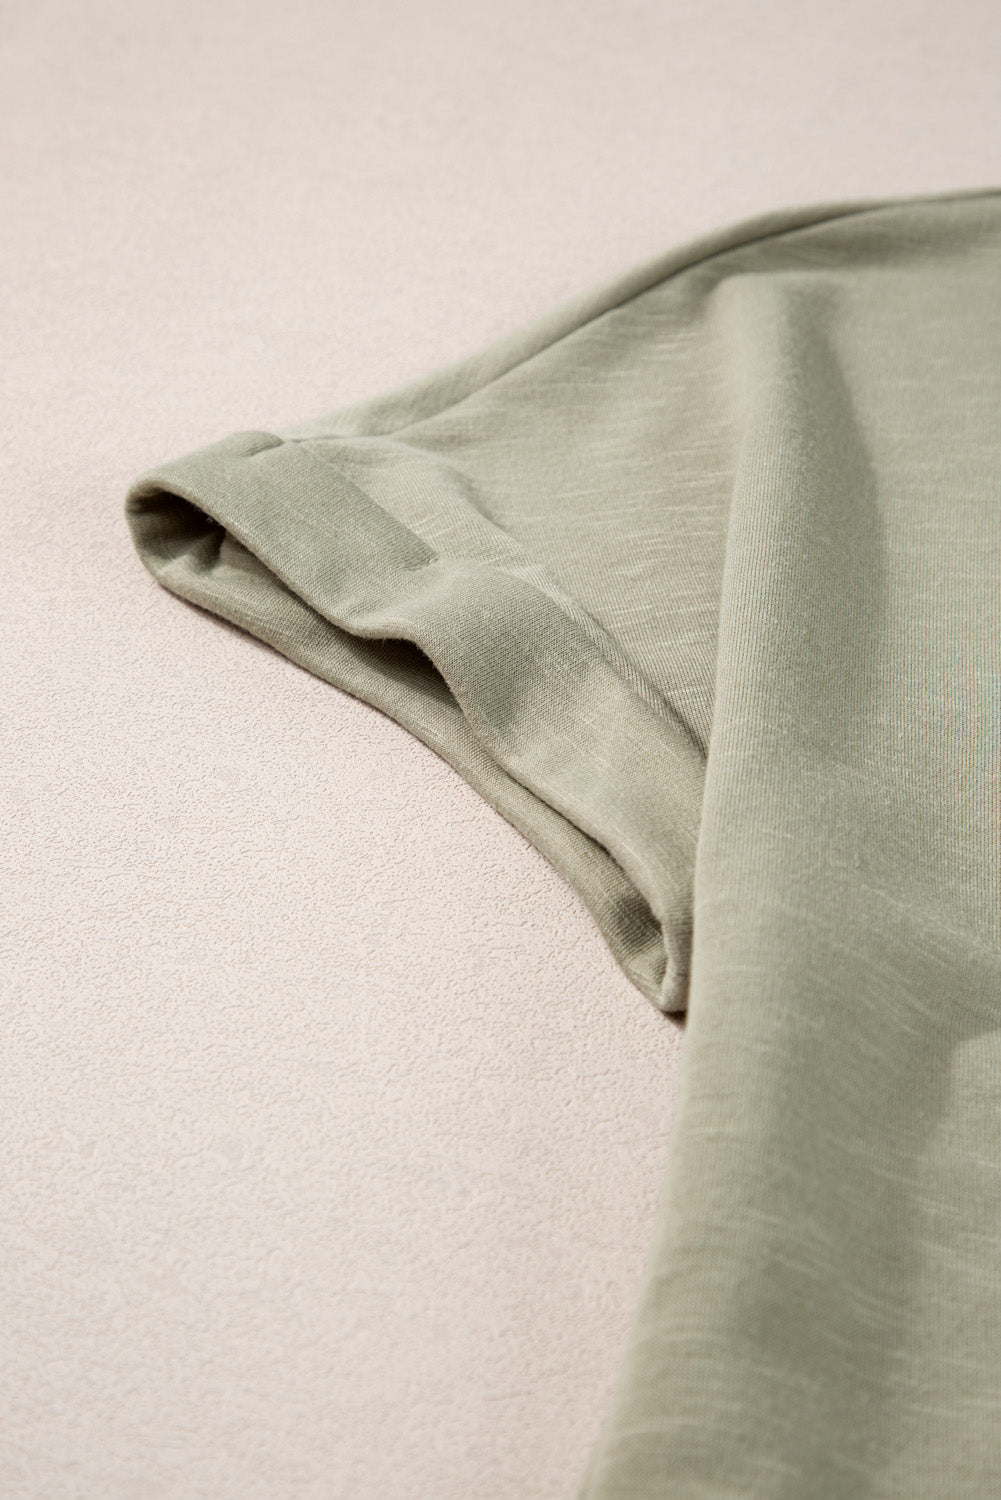 Laurel Green Folded Sleeve Twisted Mini T-Shirt Dress Blue Zone Planet